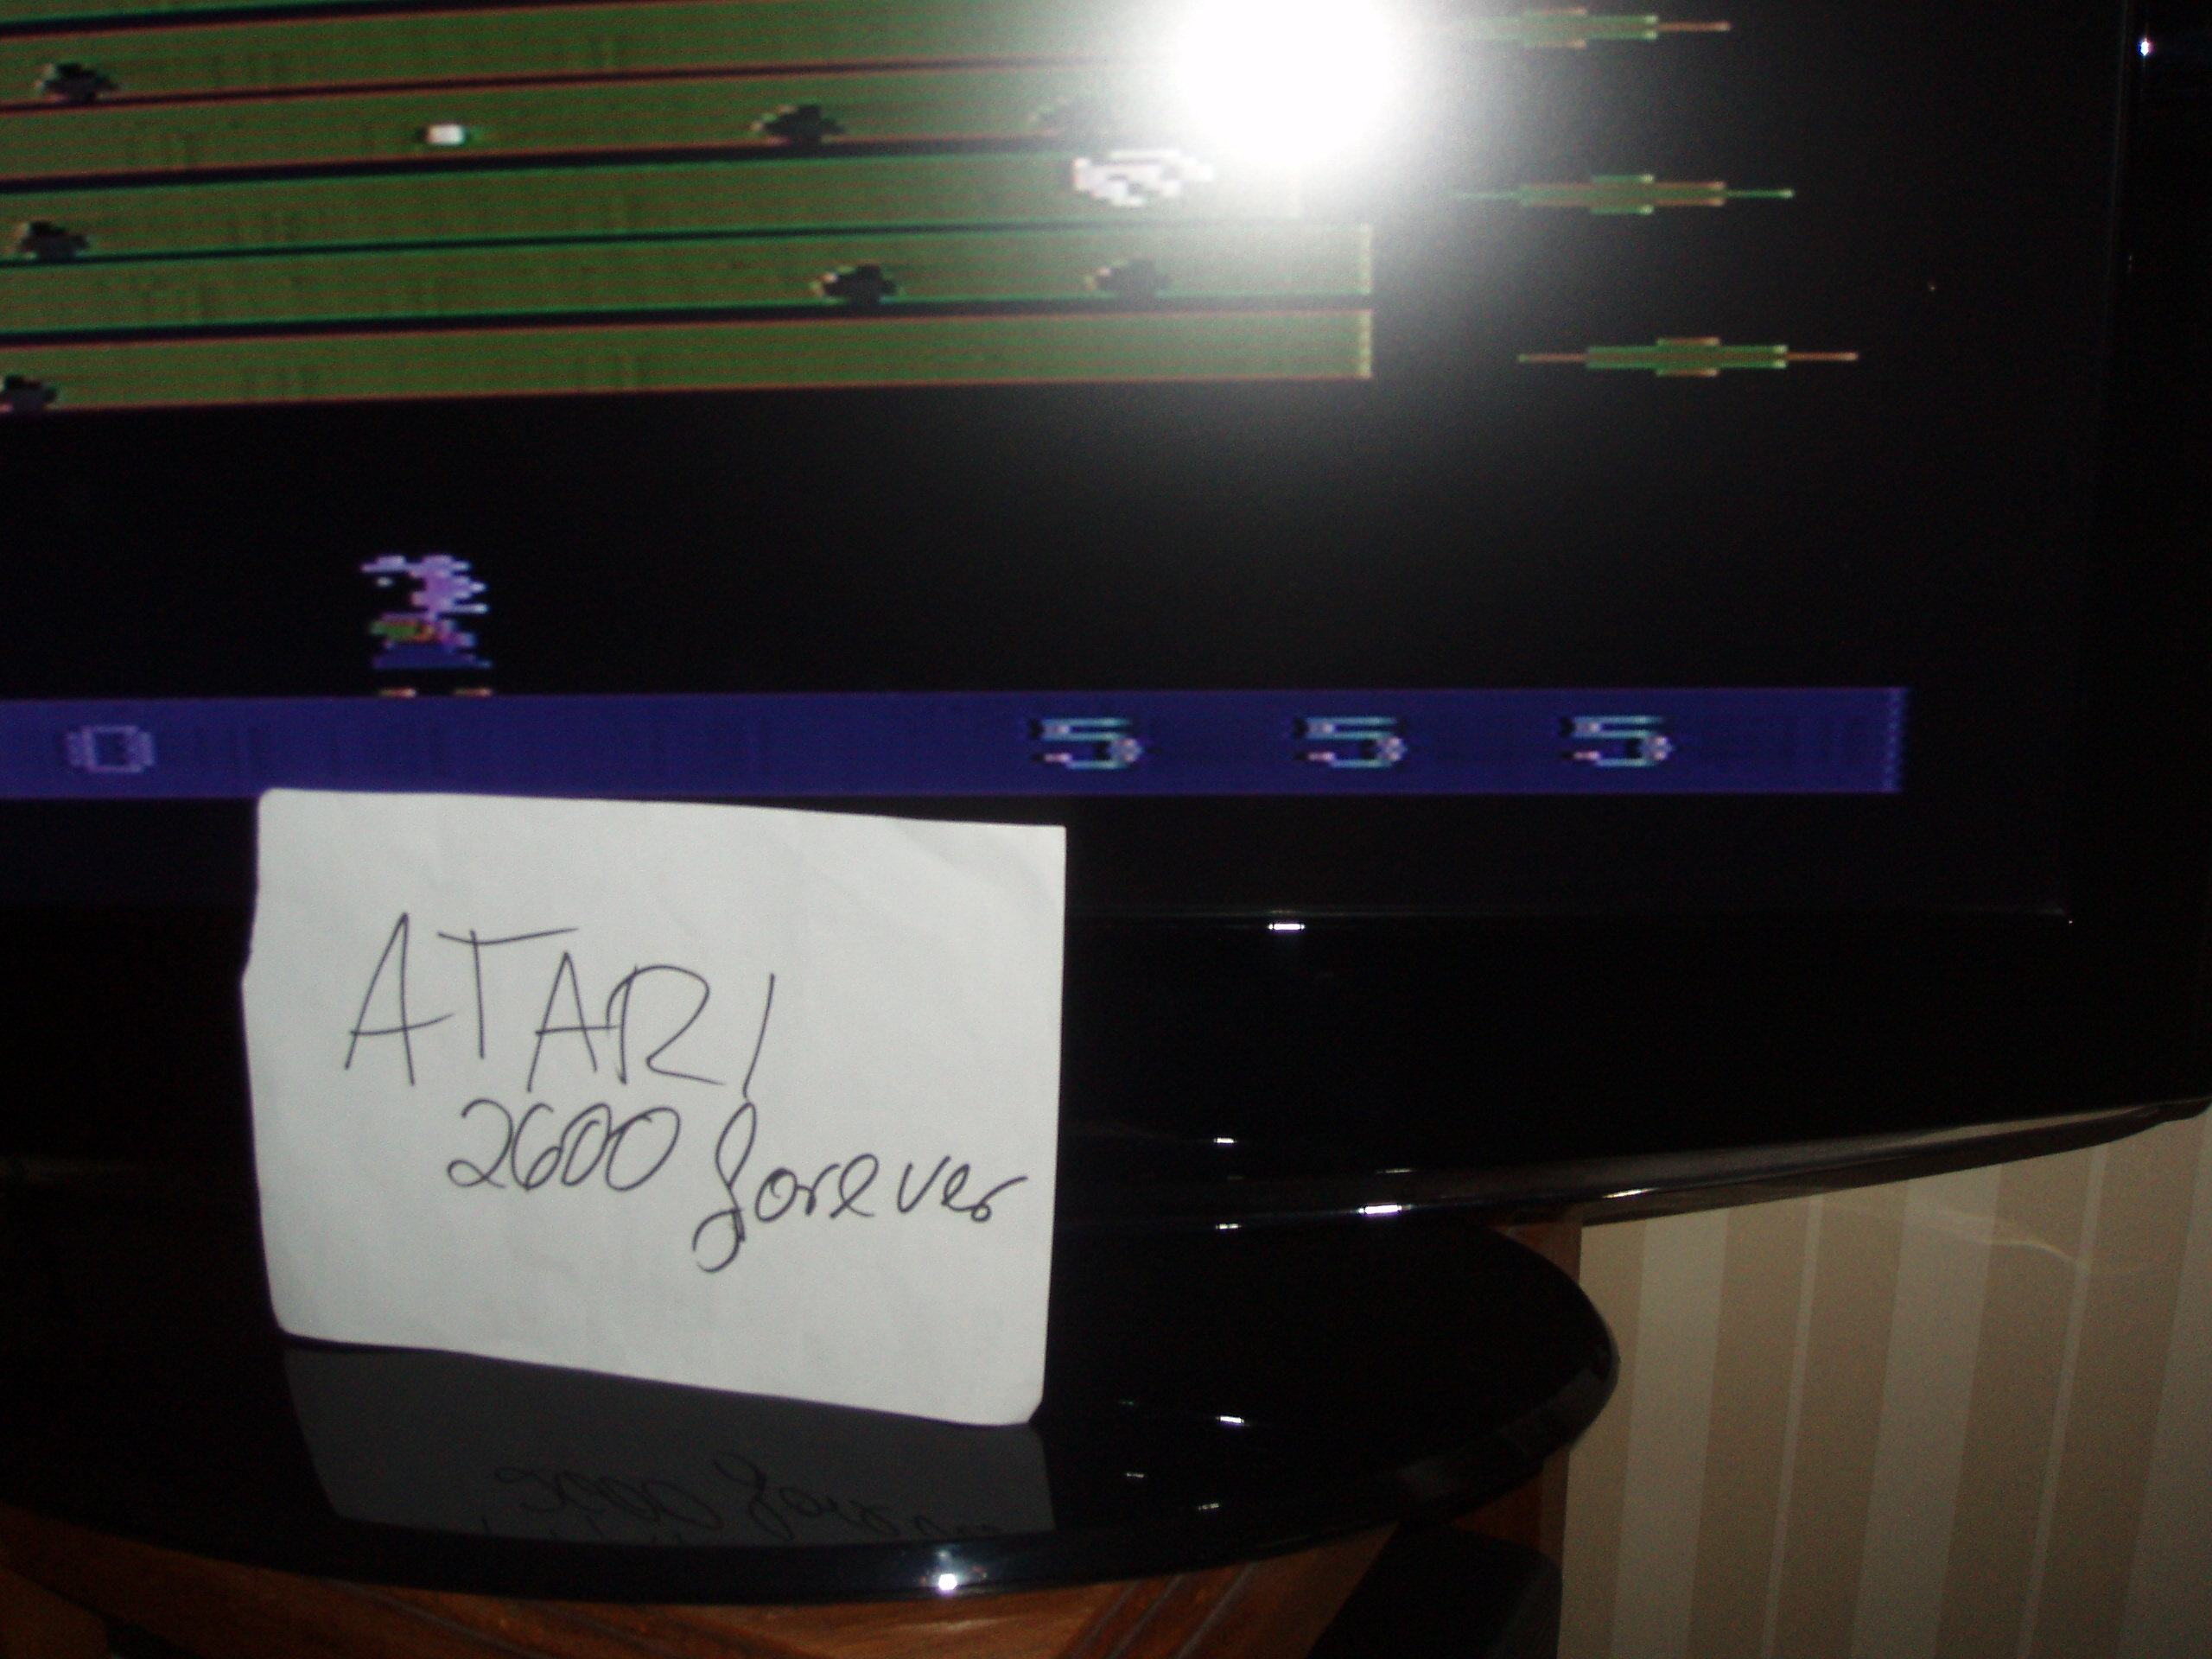 atari2600forever: Wabbit: Game 5 (Atari 2600 Novice/B) 555 points on 2017-08-05 04:37:30